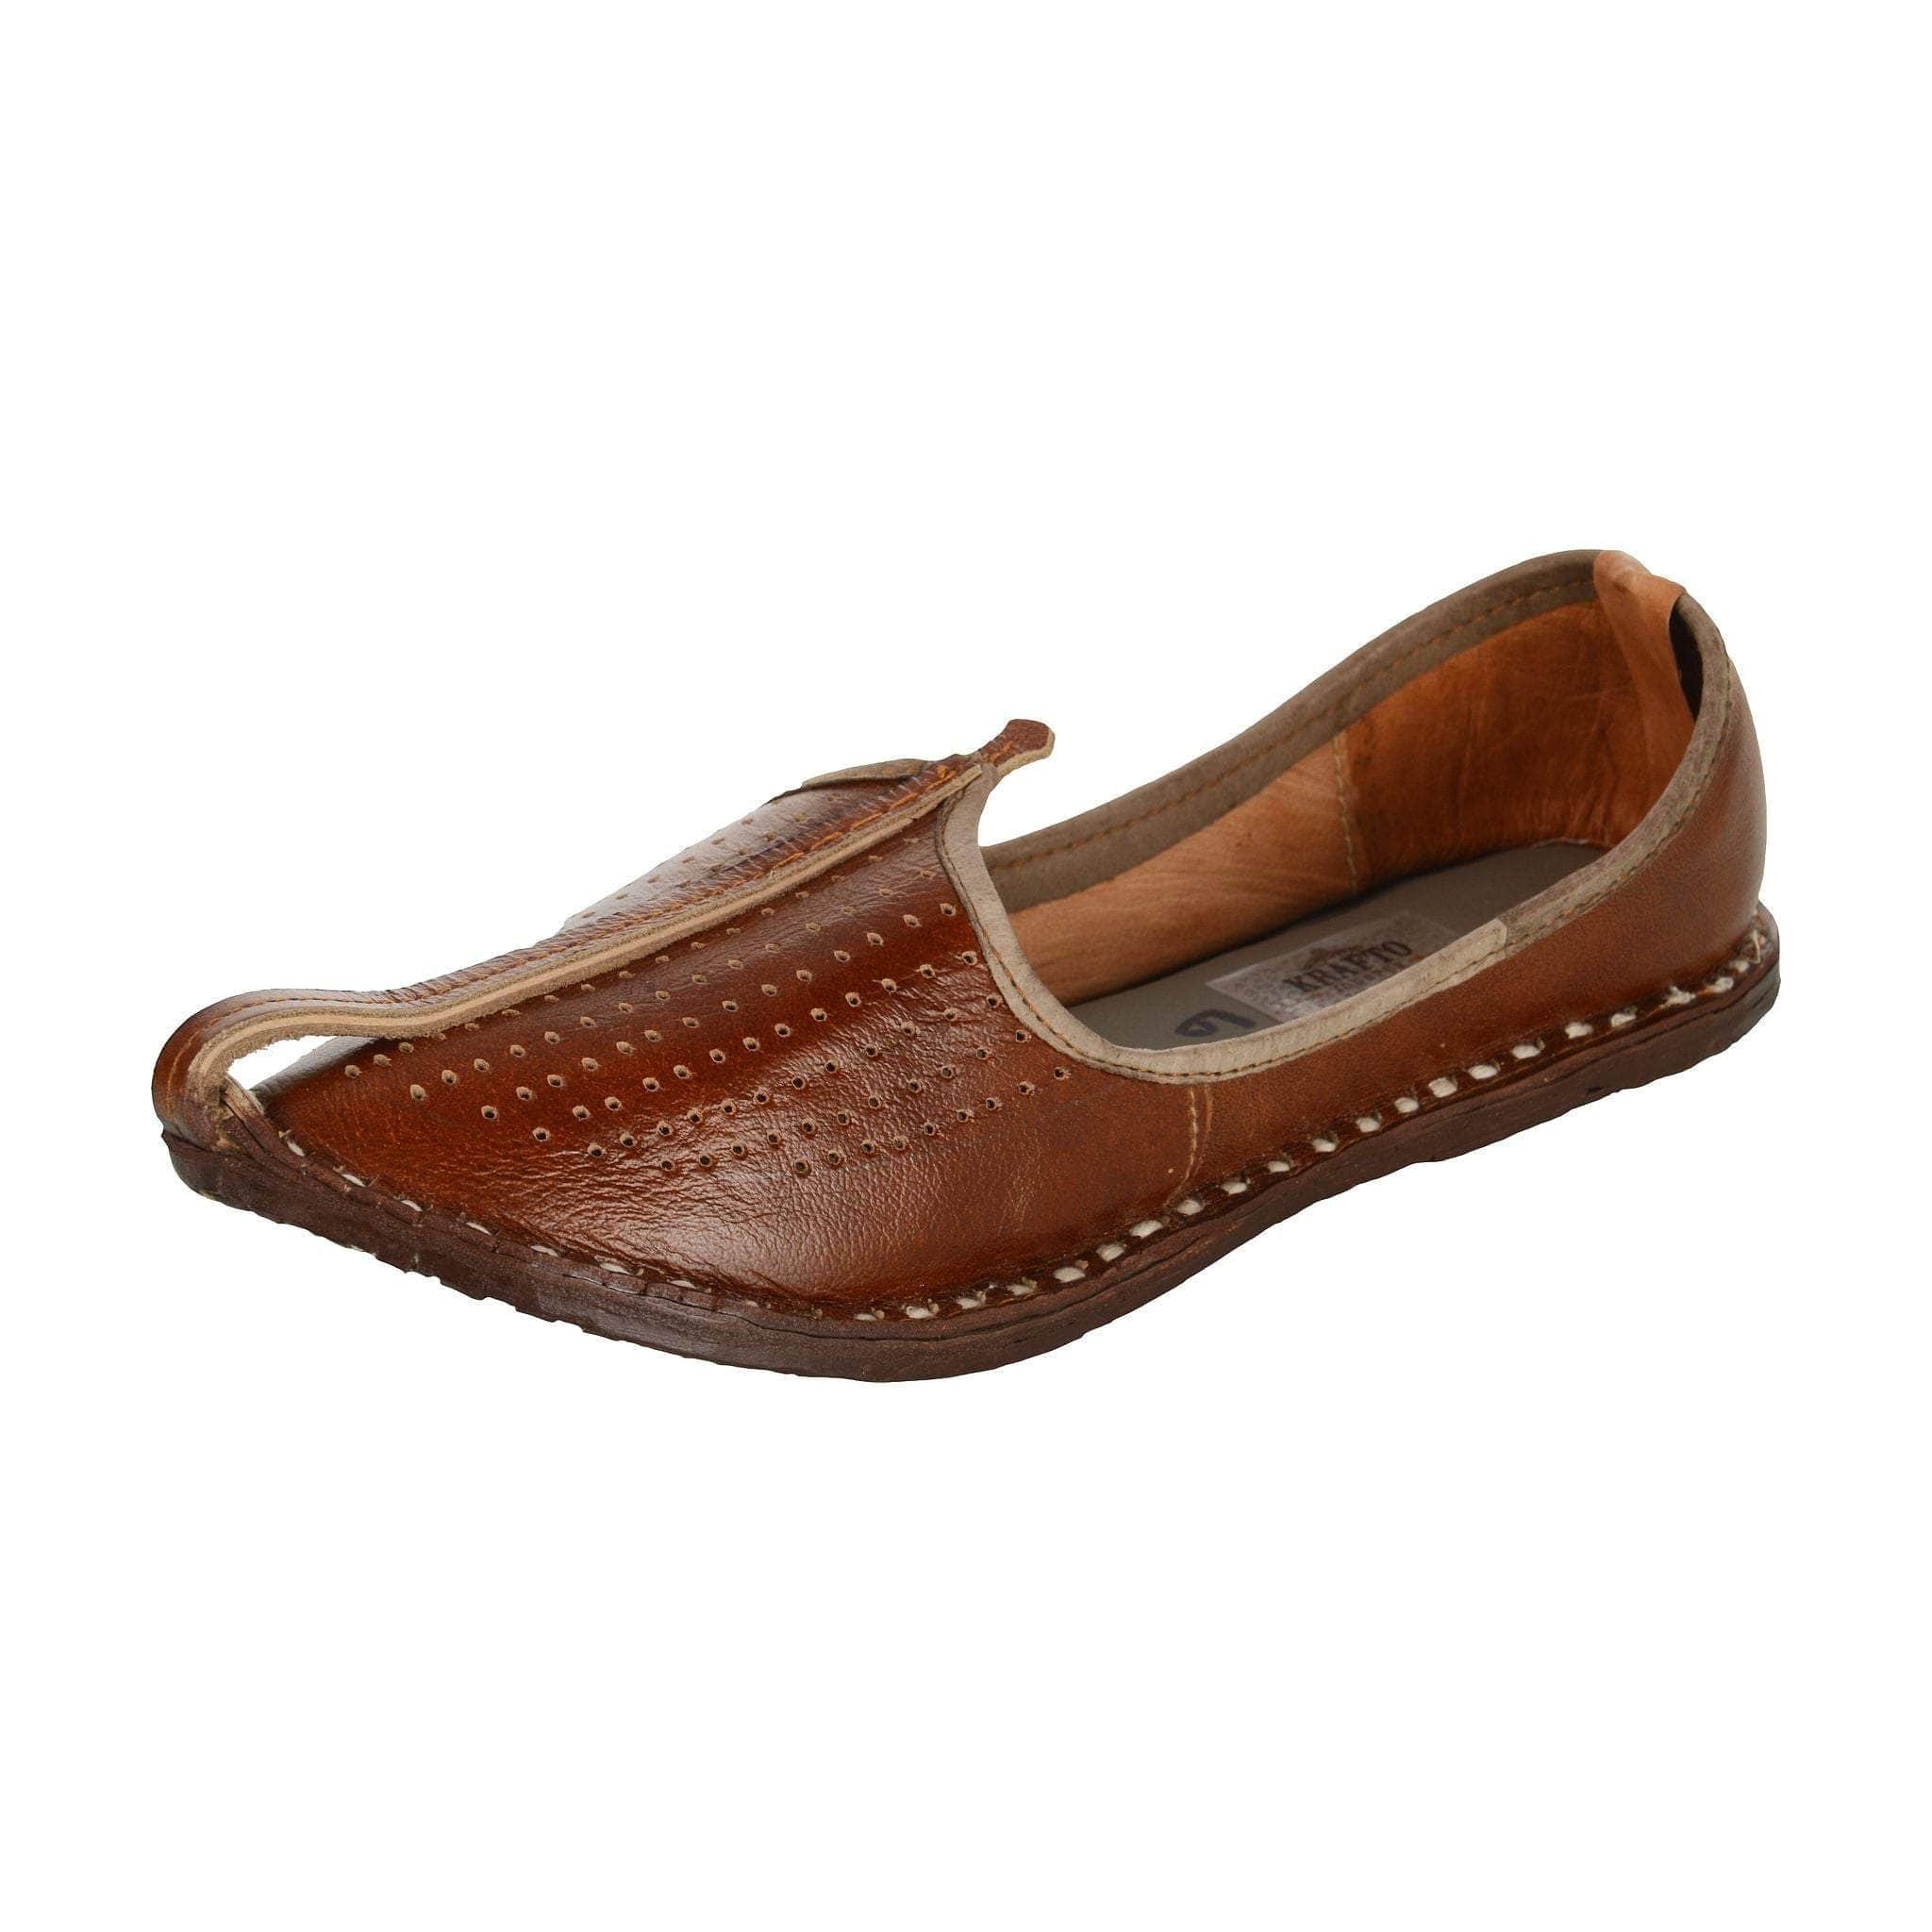 Pure Handmade Leather Shoe market Lahore, 2023 wholesale Price, Shop Contact, Location